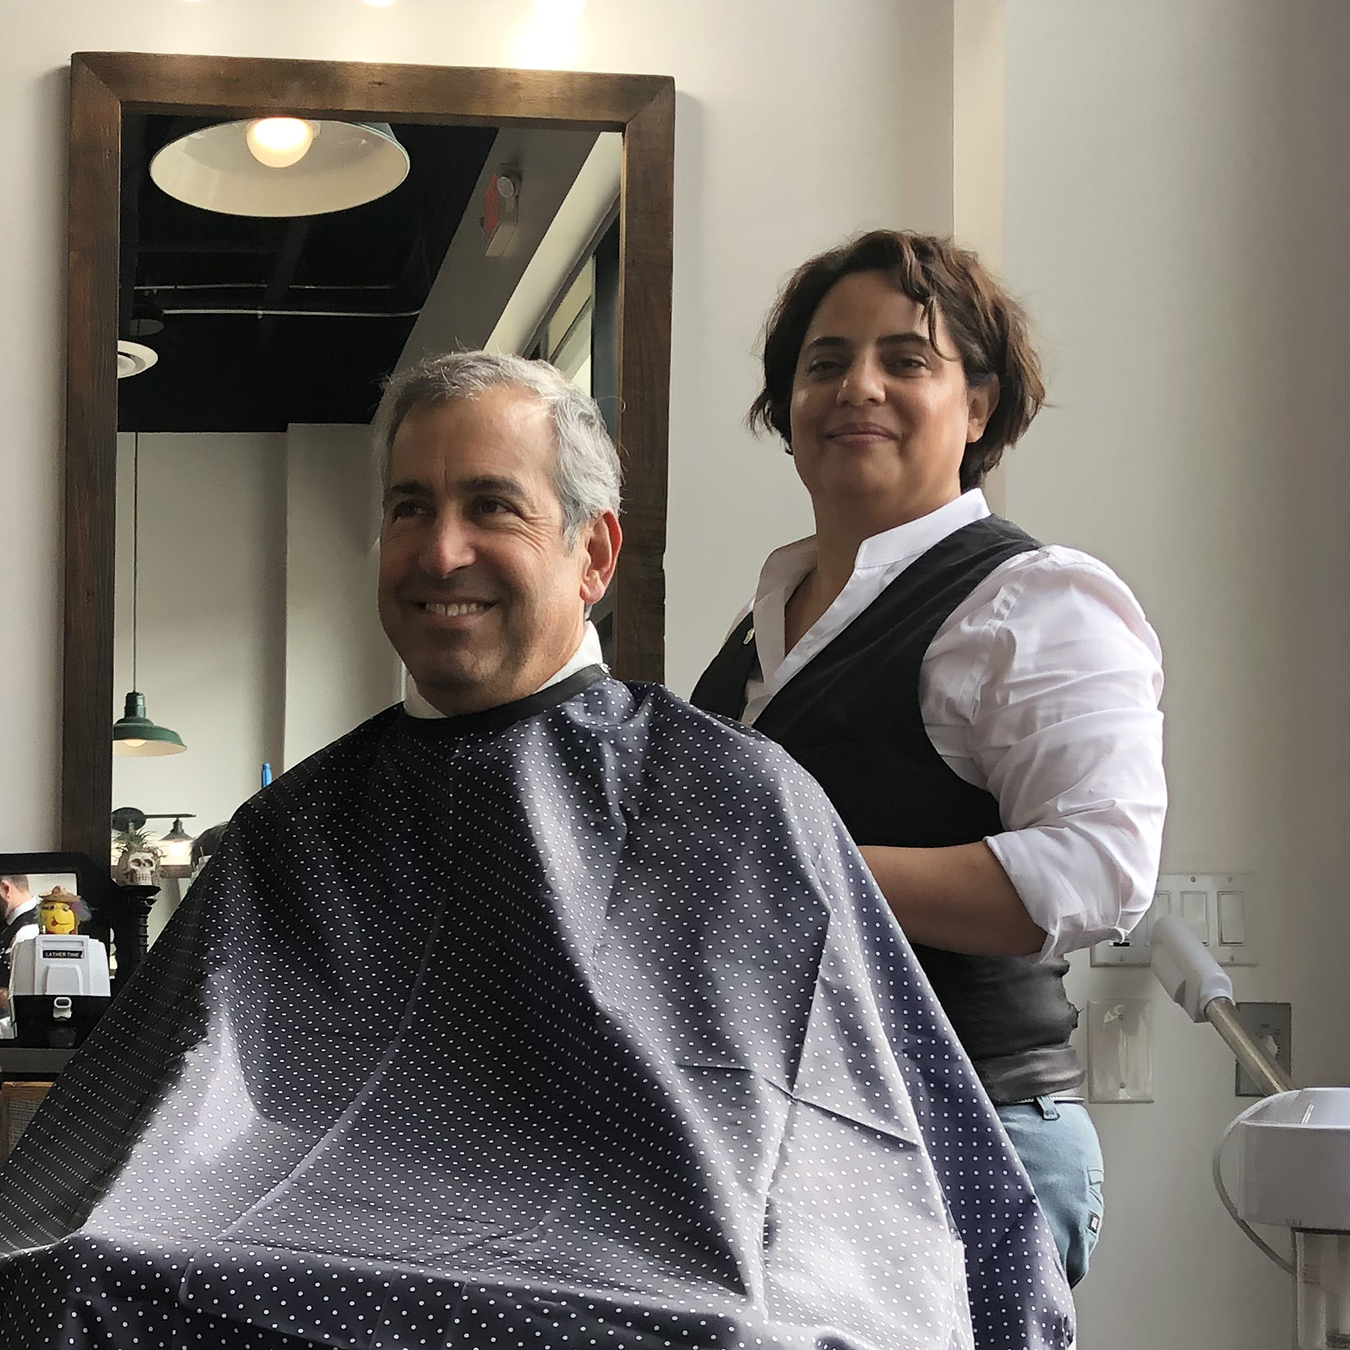 Skin Fade - Brazilian Barber Shop